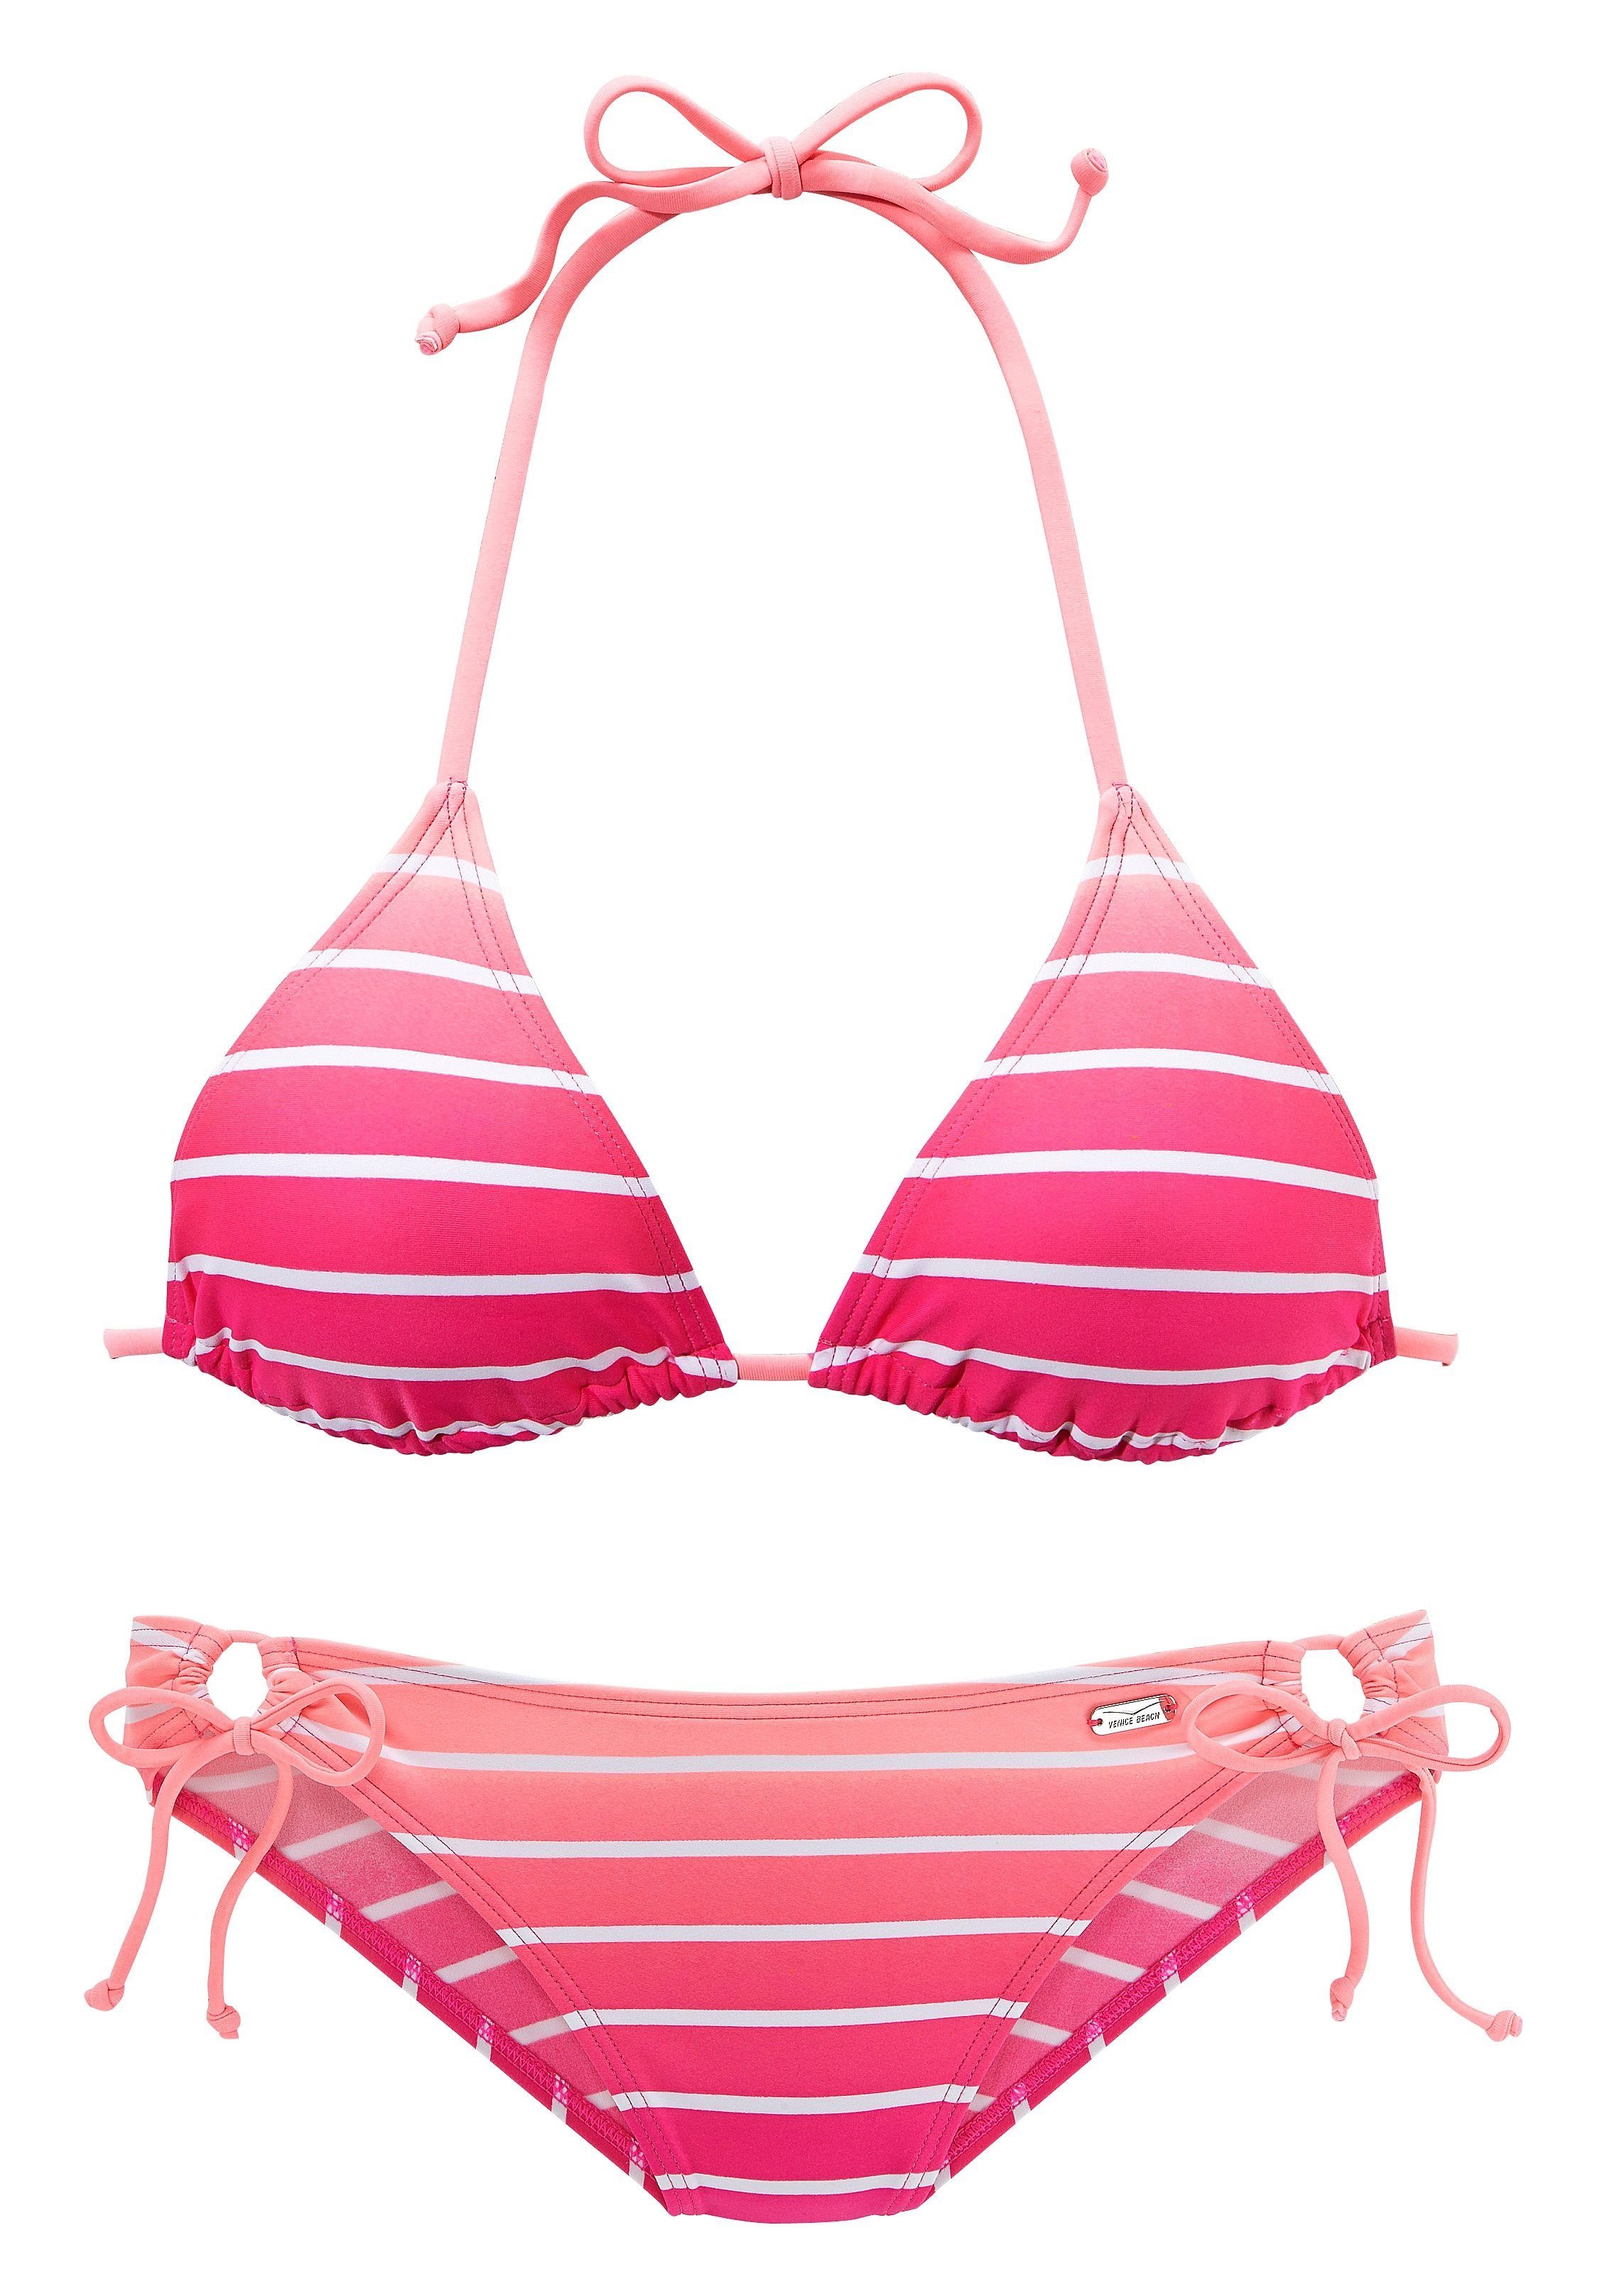 Venice Beach Triangel-Bikini in Neonfarben pink-gestreift